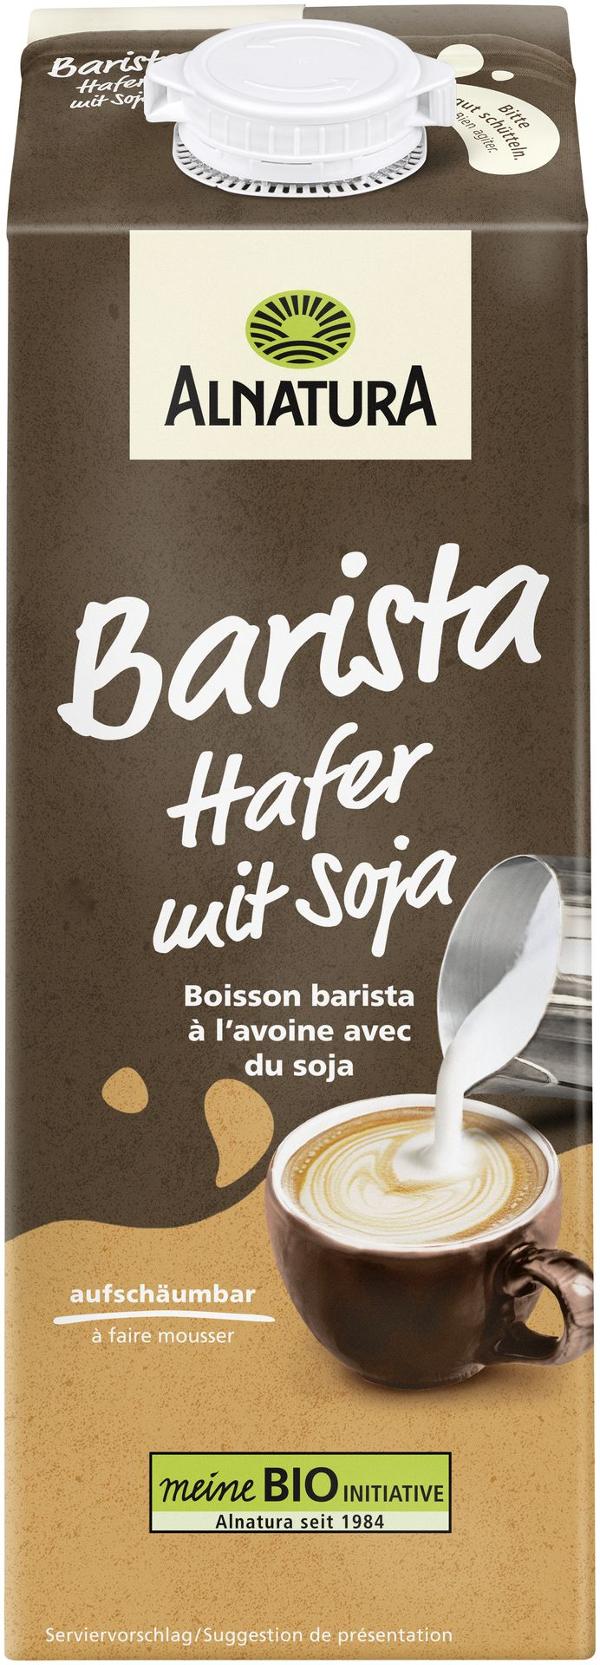 Produktfoto zu Barista Hafer mit Soja 1 l Alnatura